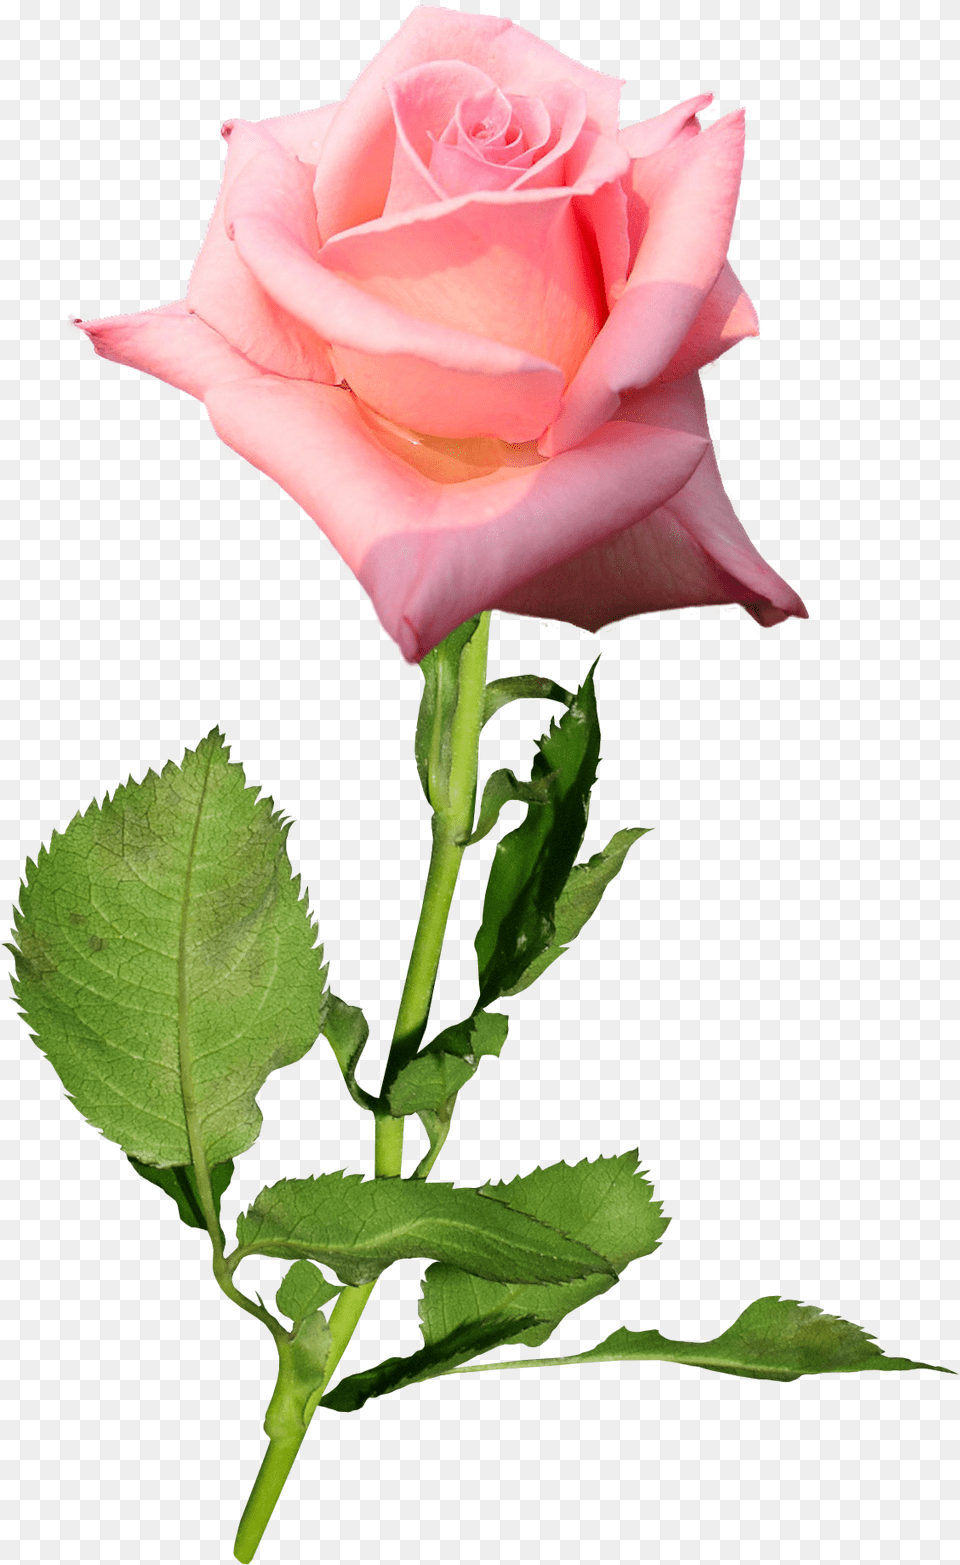 Garden Roses Flower Hybrid Tea Rose Bud Hybrid Tea Rose Bud, Plant Free Transparent Png